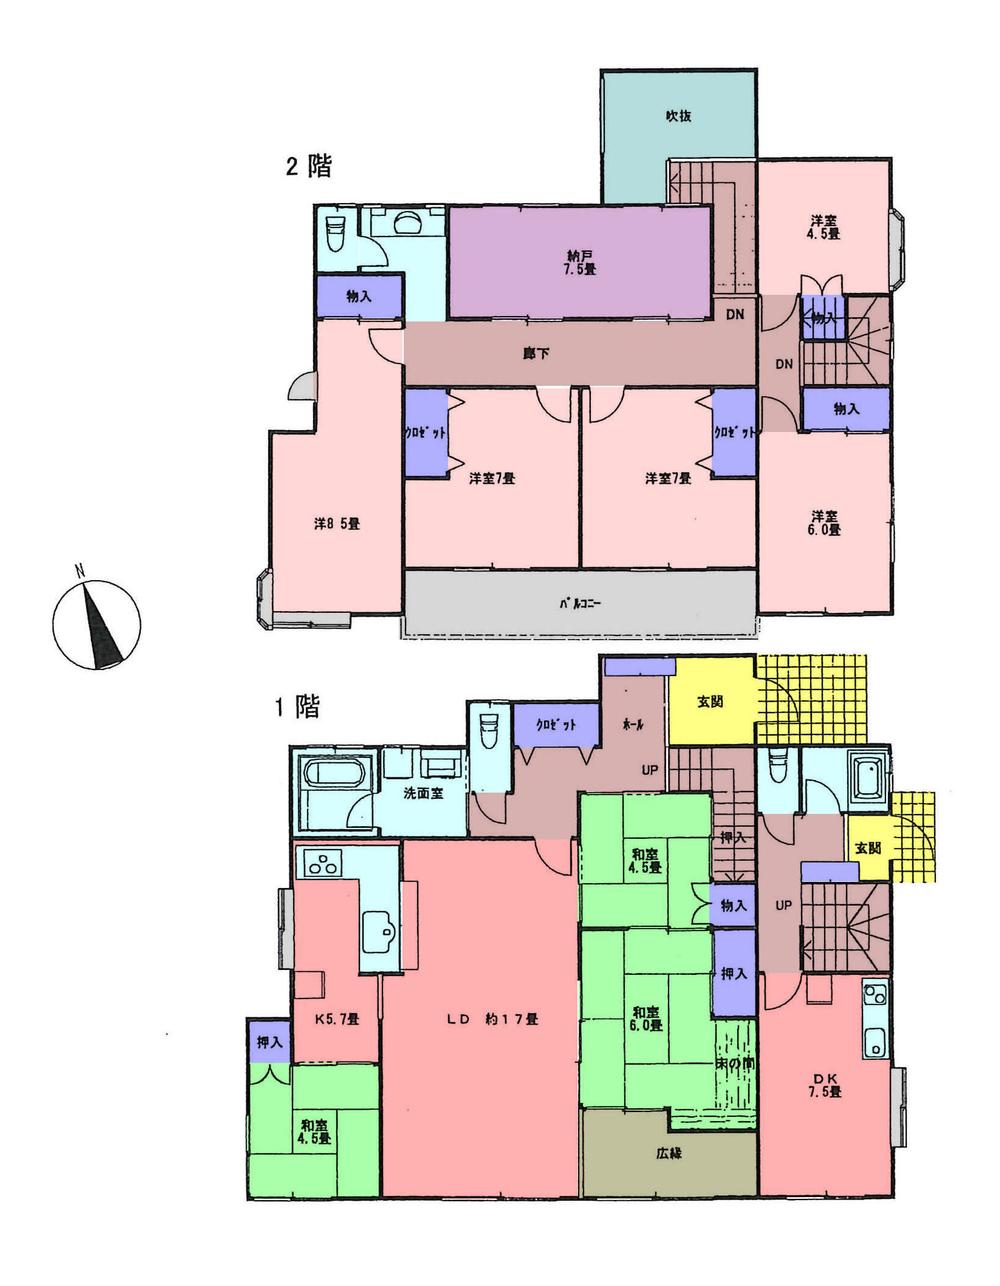 Floor plan. 73 million yen, 8LDDKK + S (storeroom), Land area 263.55 sq m , Building area 214.39 sq m